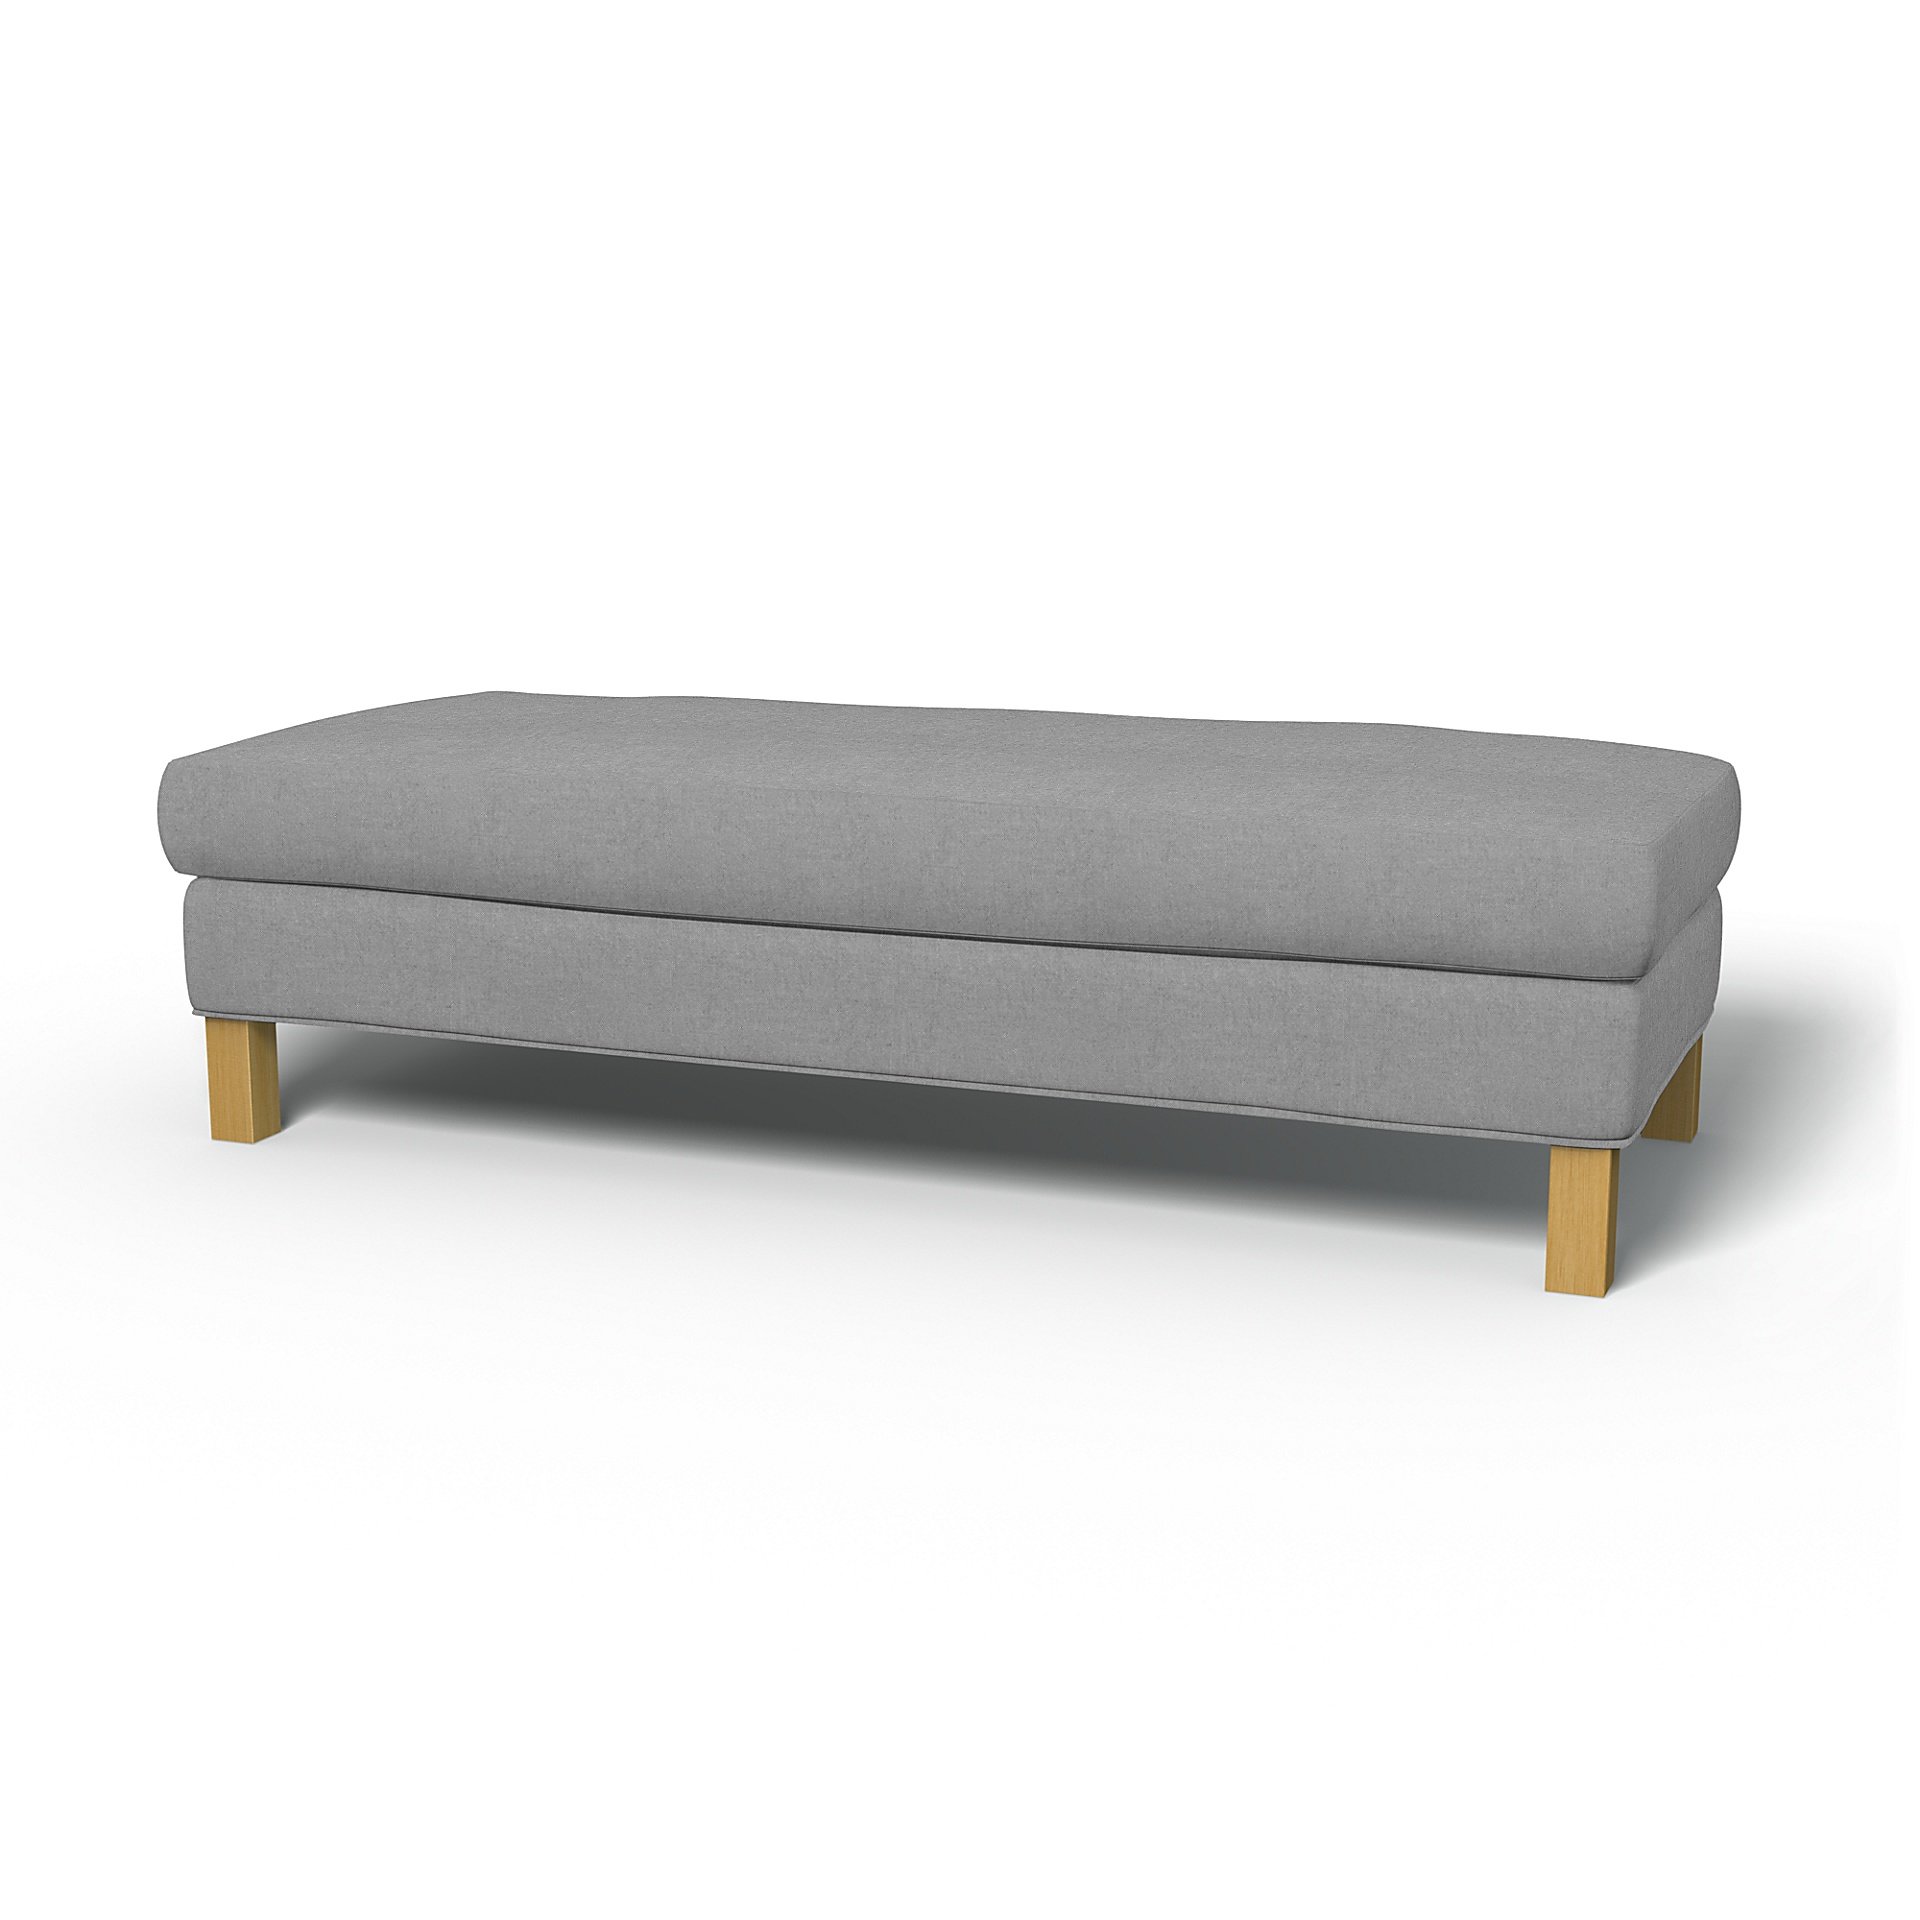 IKEA - Karlanda Bench Cover, Graphite, Linen - Bemz